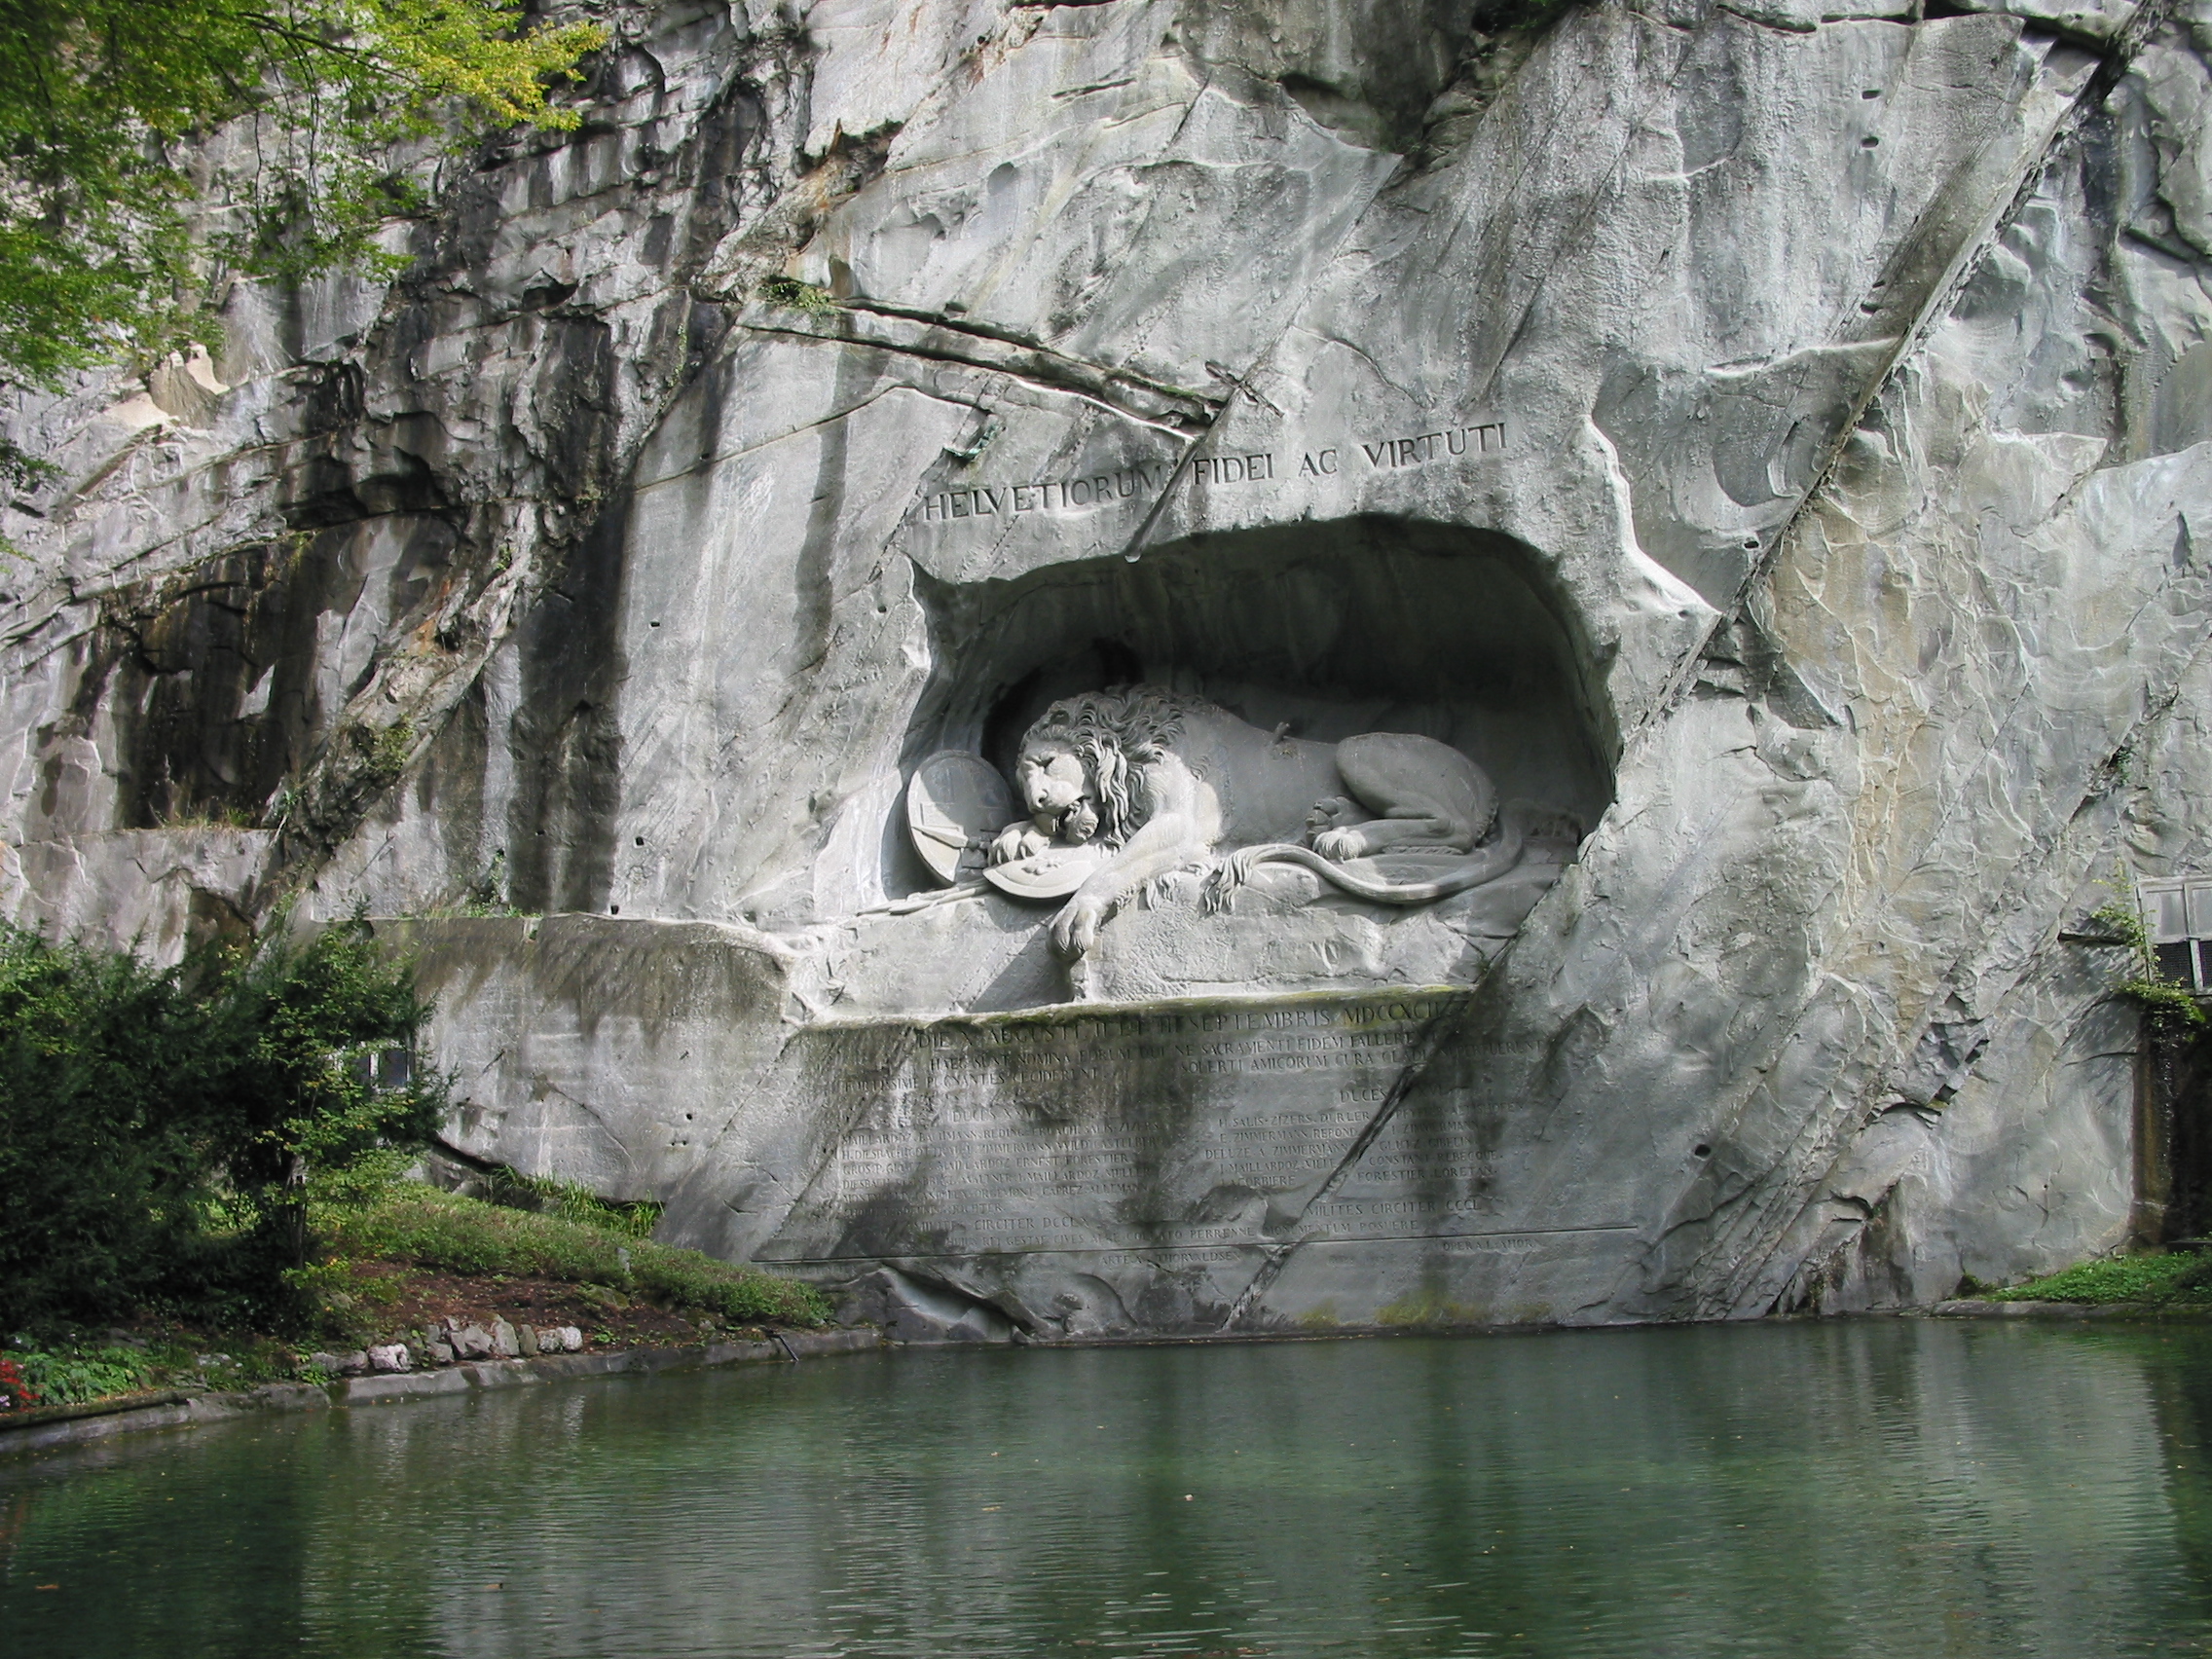 Europe Trip 2005 - Switzerland (Lucerne - The Lion Monument, Swiss Fondue, Scary Masks)